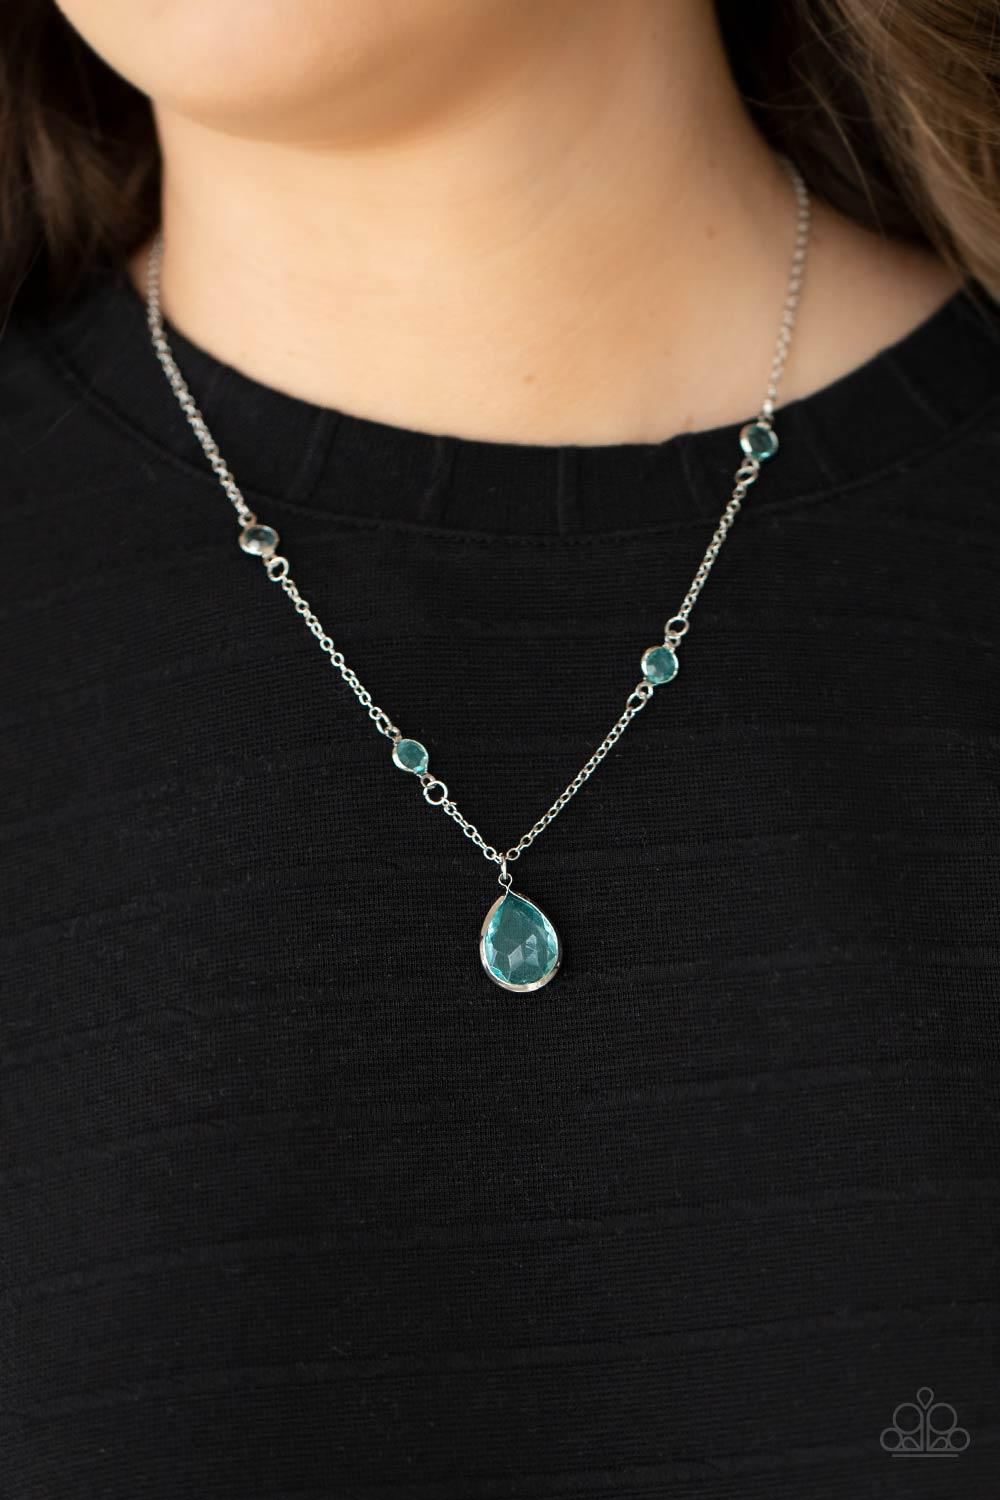 Romantic Rendezvous Blue Necklace - Jewelry b y Bretta